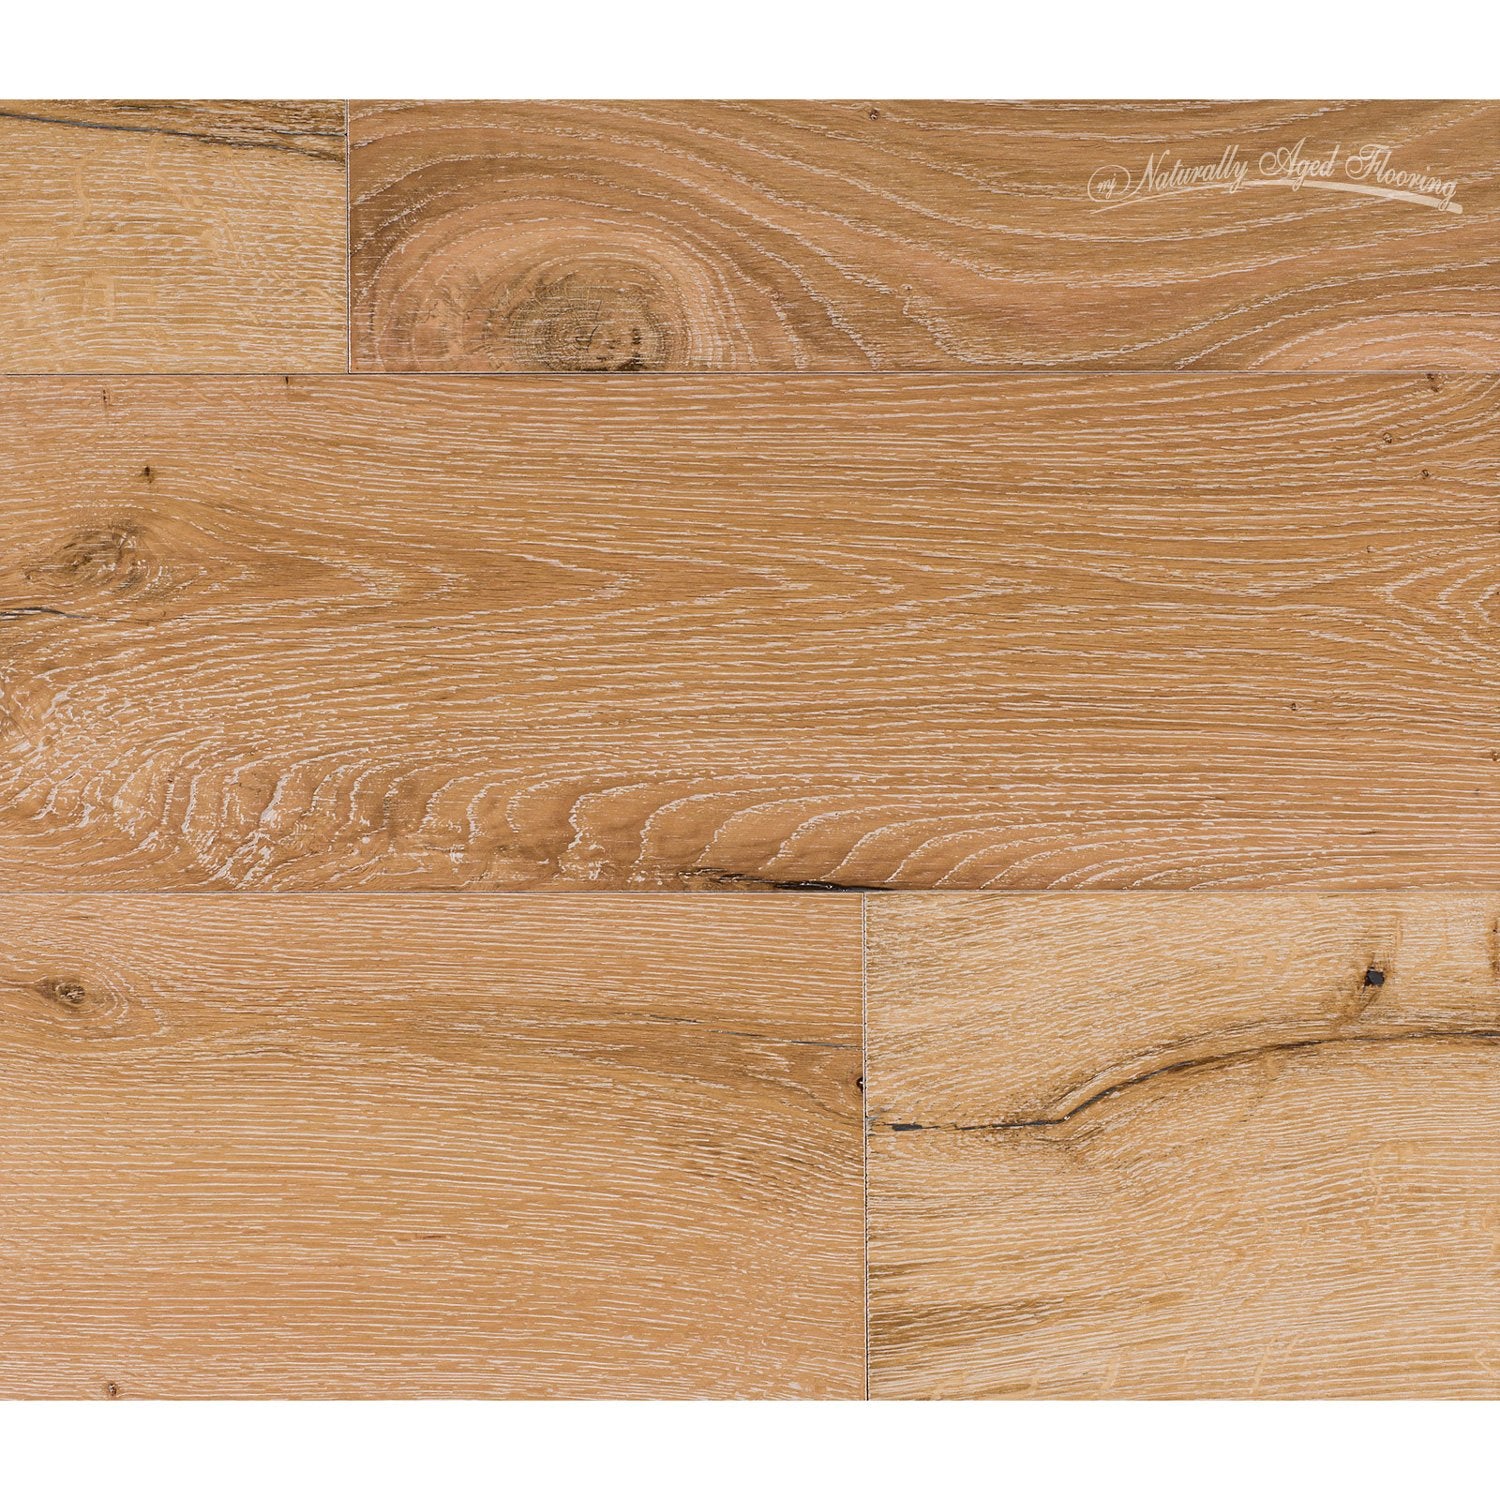 Naturally Aged Flooring - Wire Brushed Series, Oak Engineered Hardwood - Snow Cap